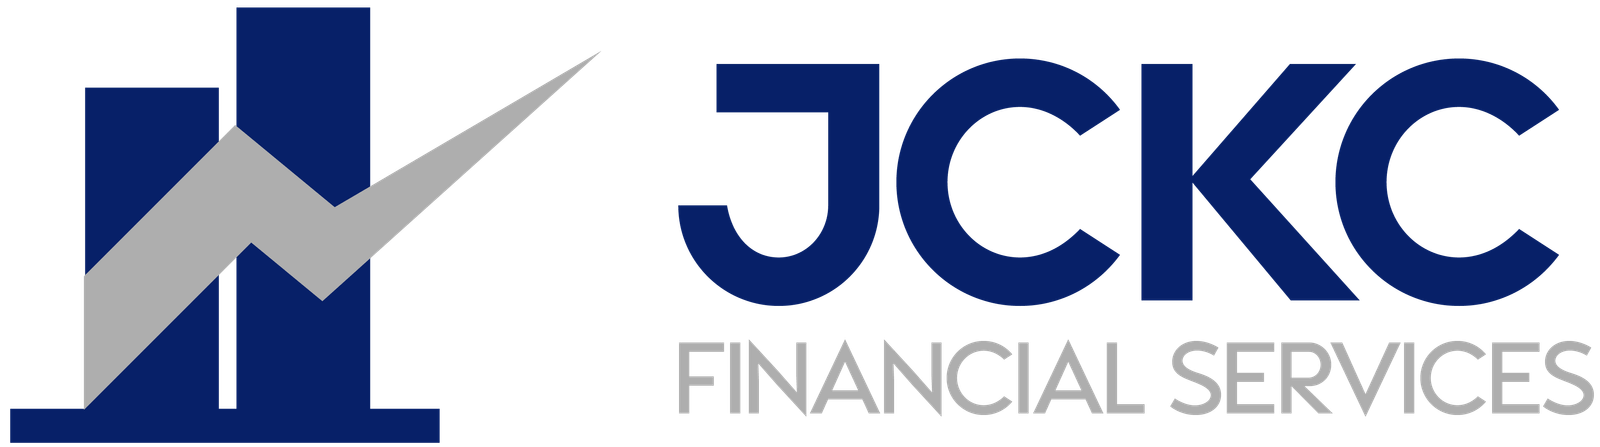 about-jckc-financial-services